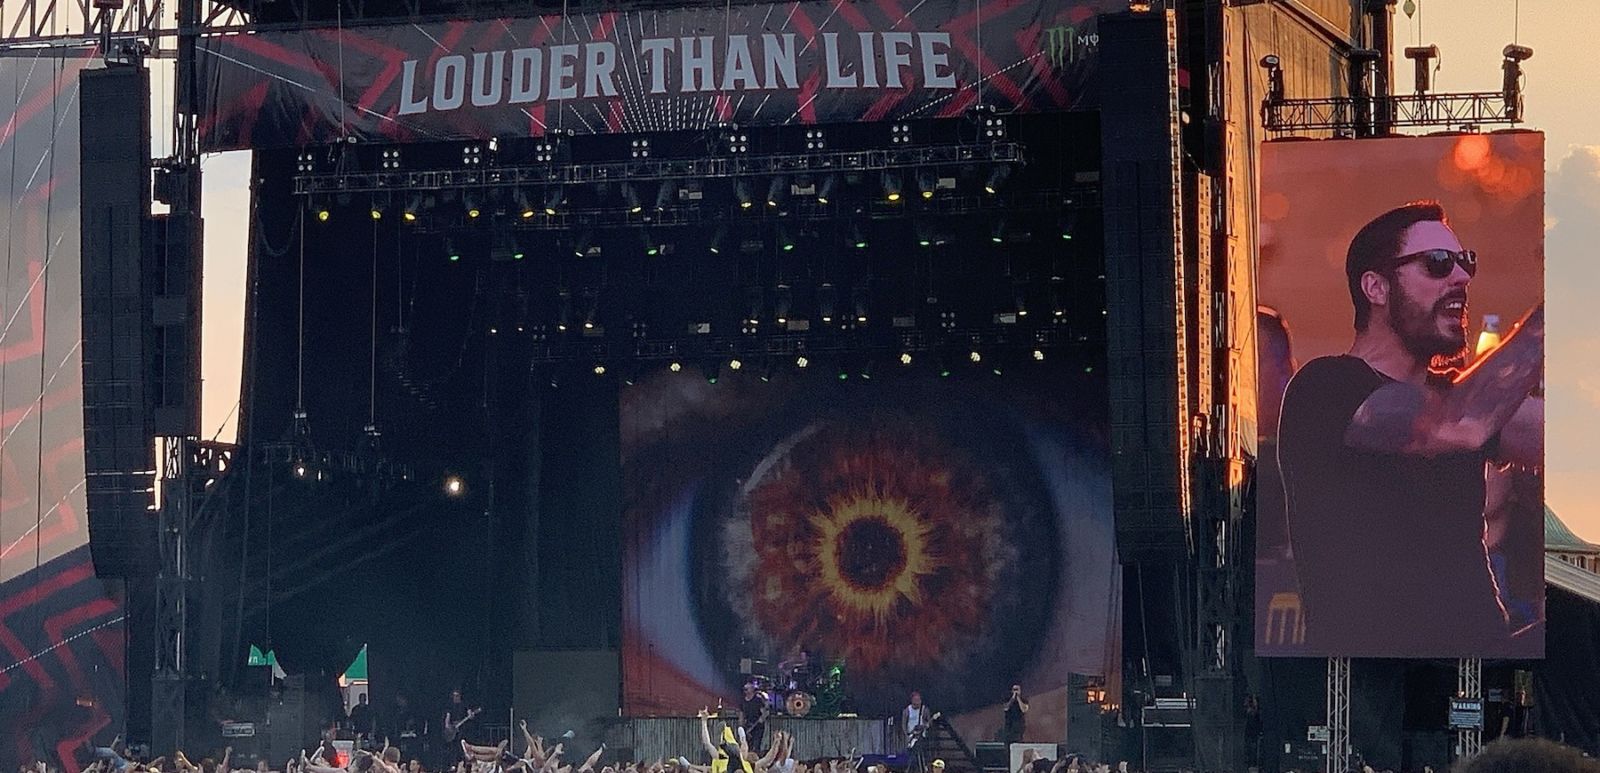 Louder Than Life festival